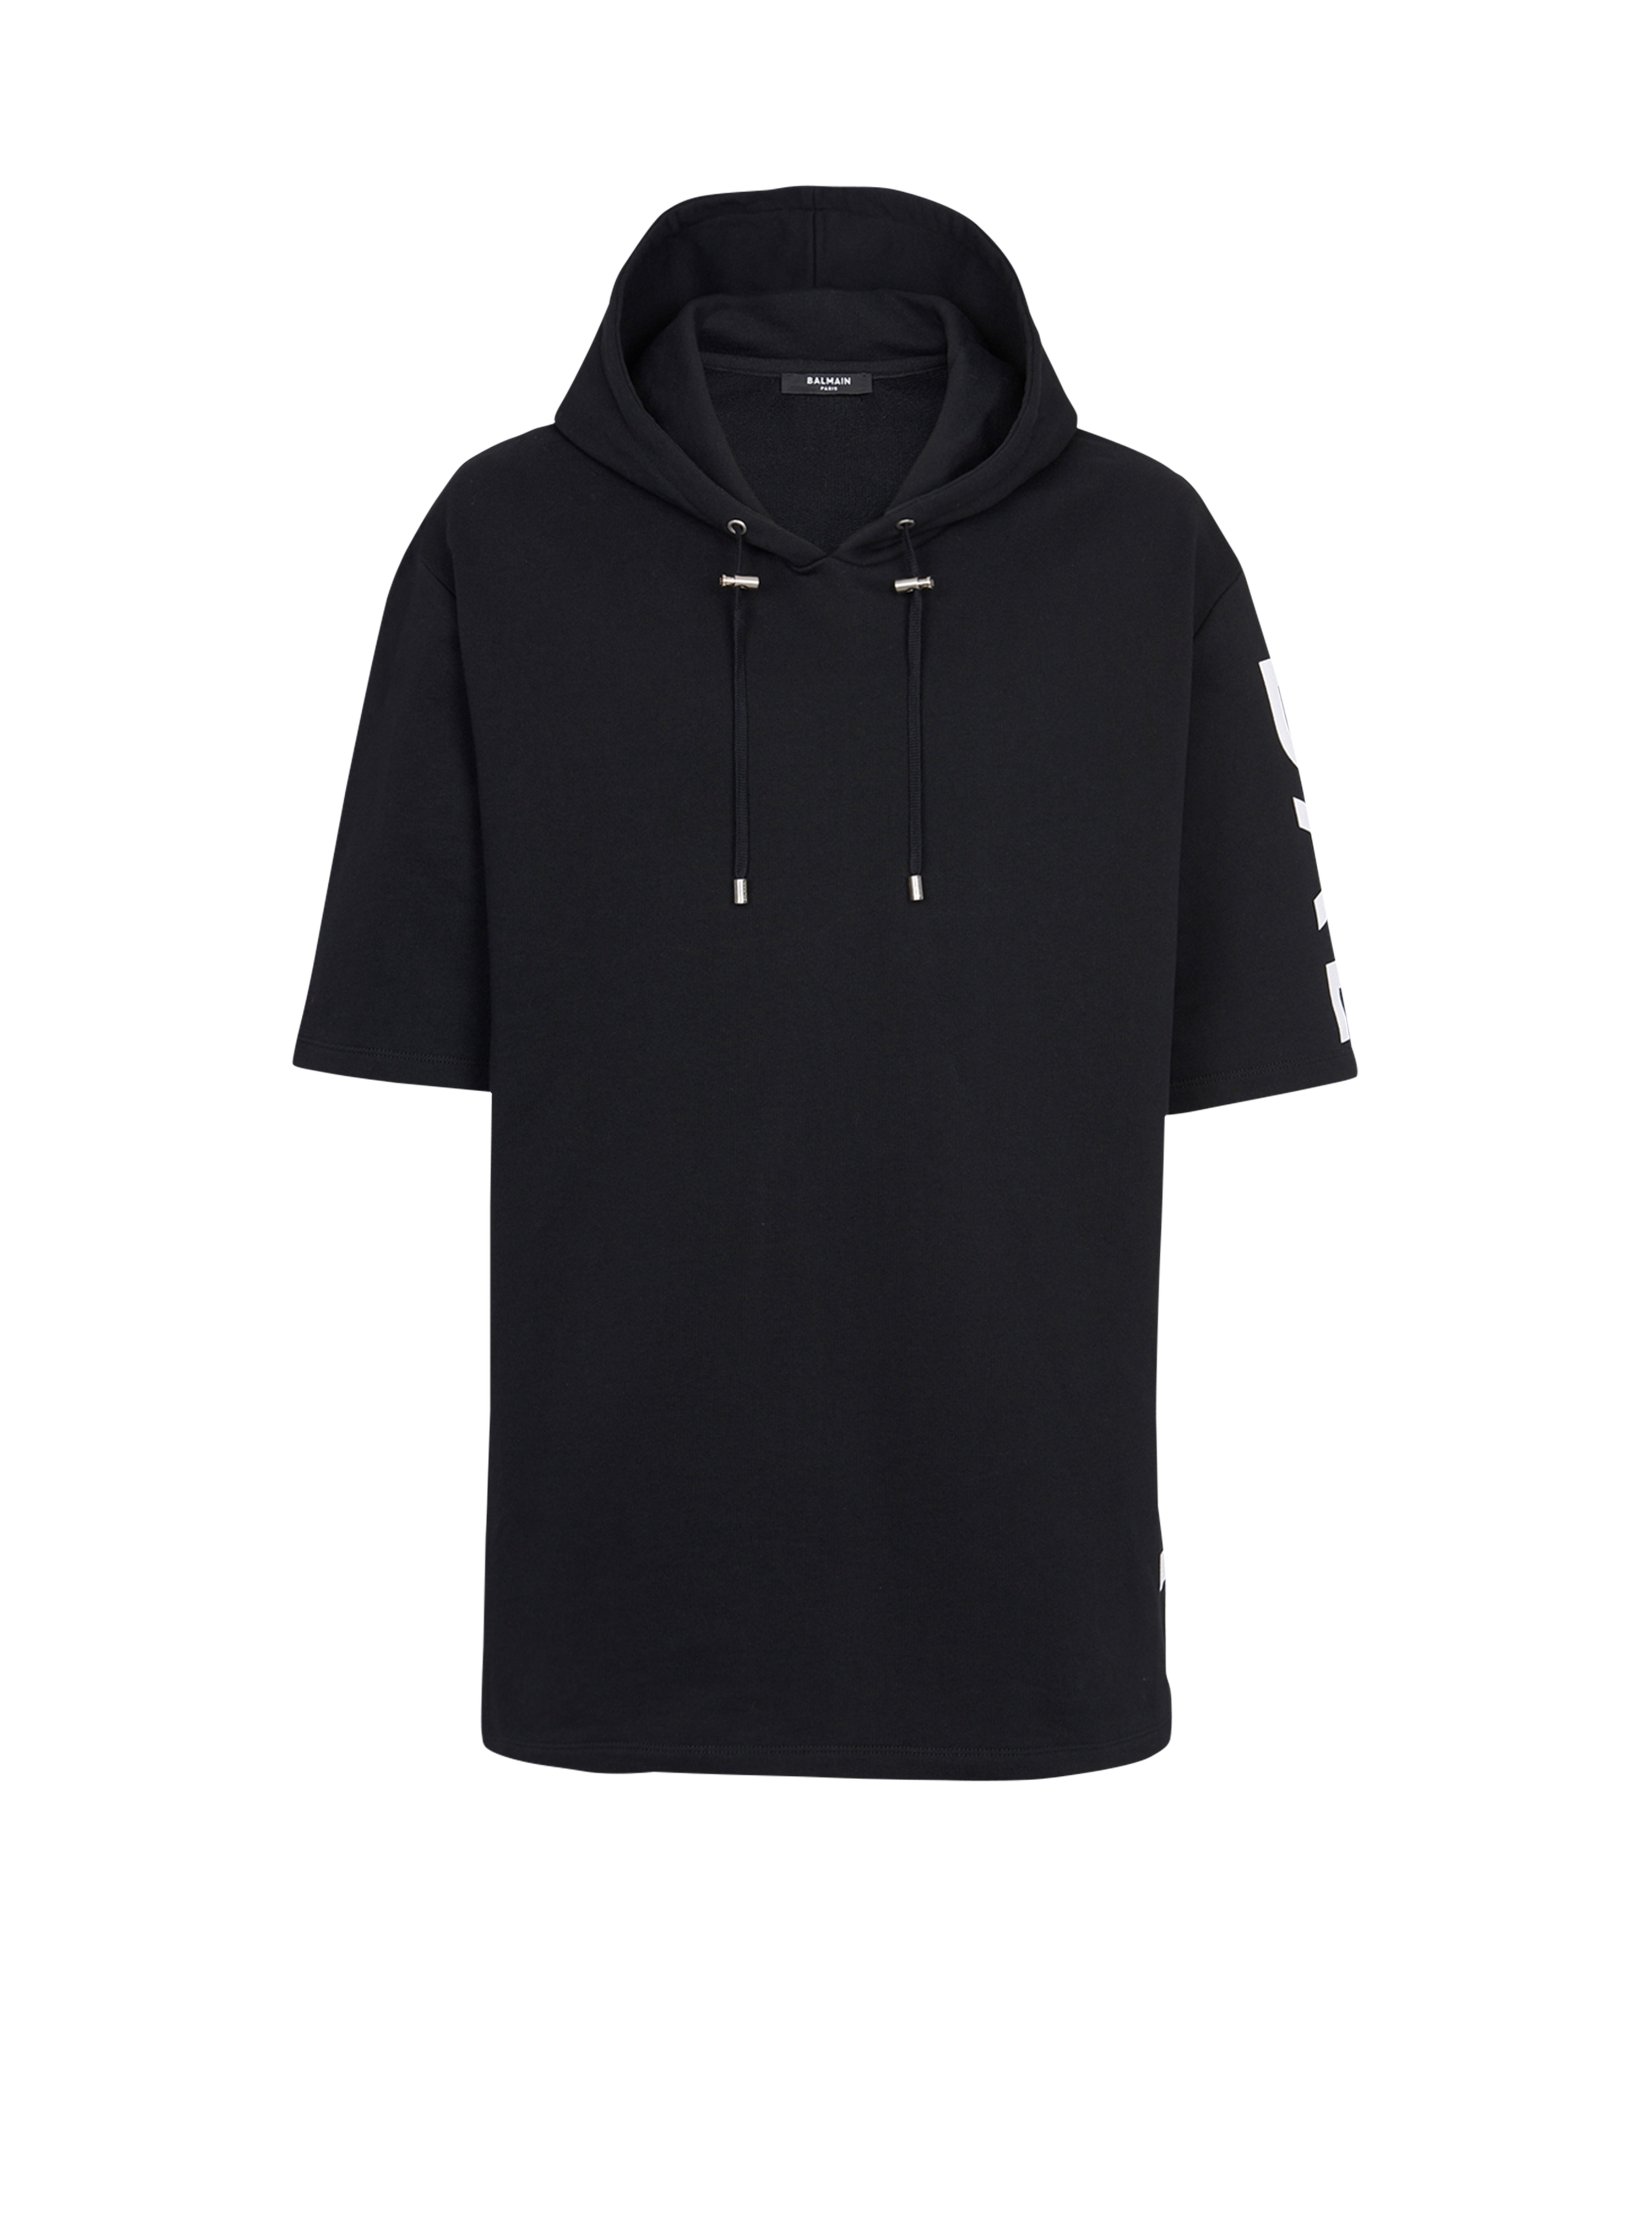 Oversized eco-designed cotton hooded sweatshirt with Balmain logo print, black